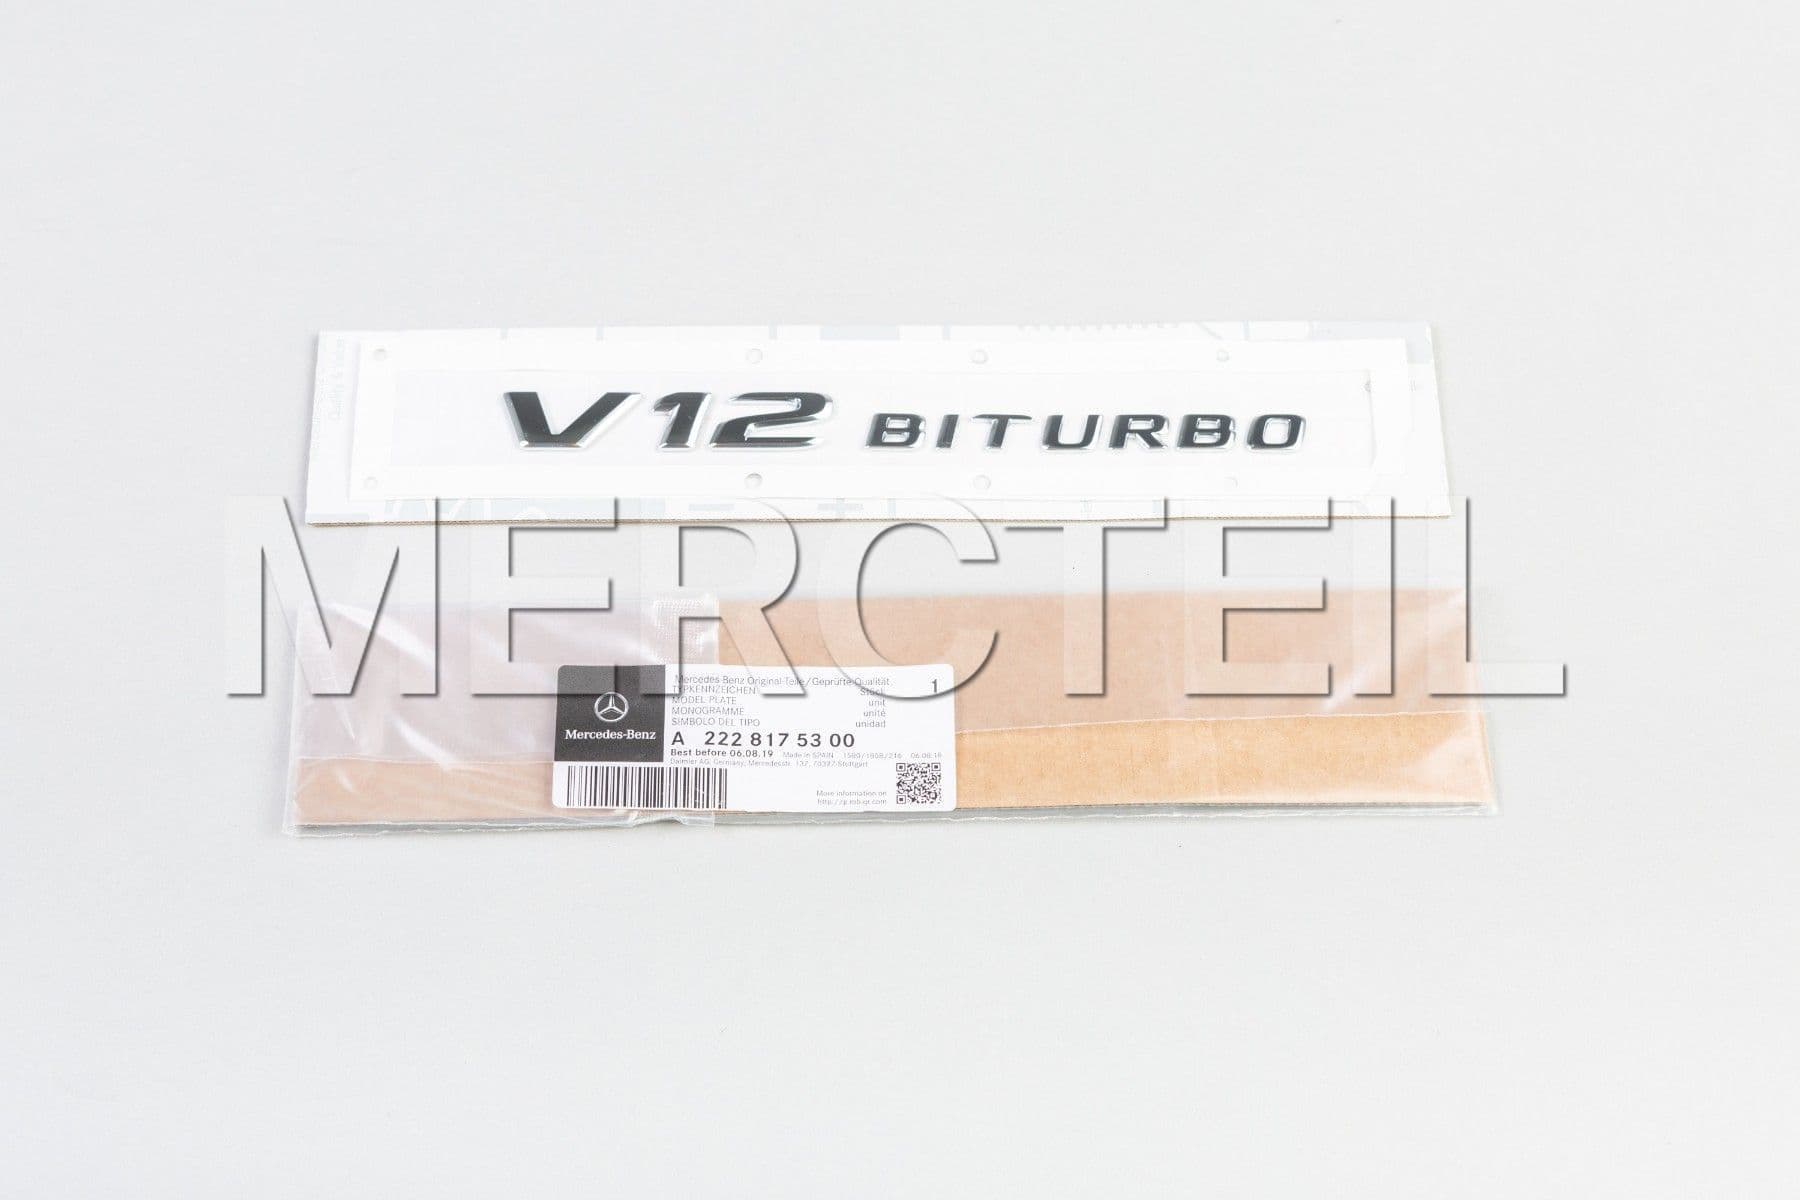 S65 AMG V12 Biturbo Aufkleber Original Mercedes AMG (Teilenummer: A2228175300)